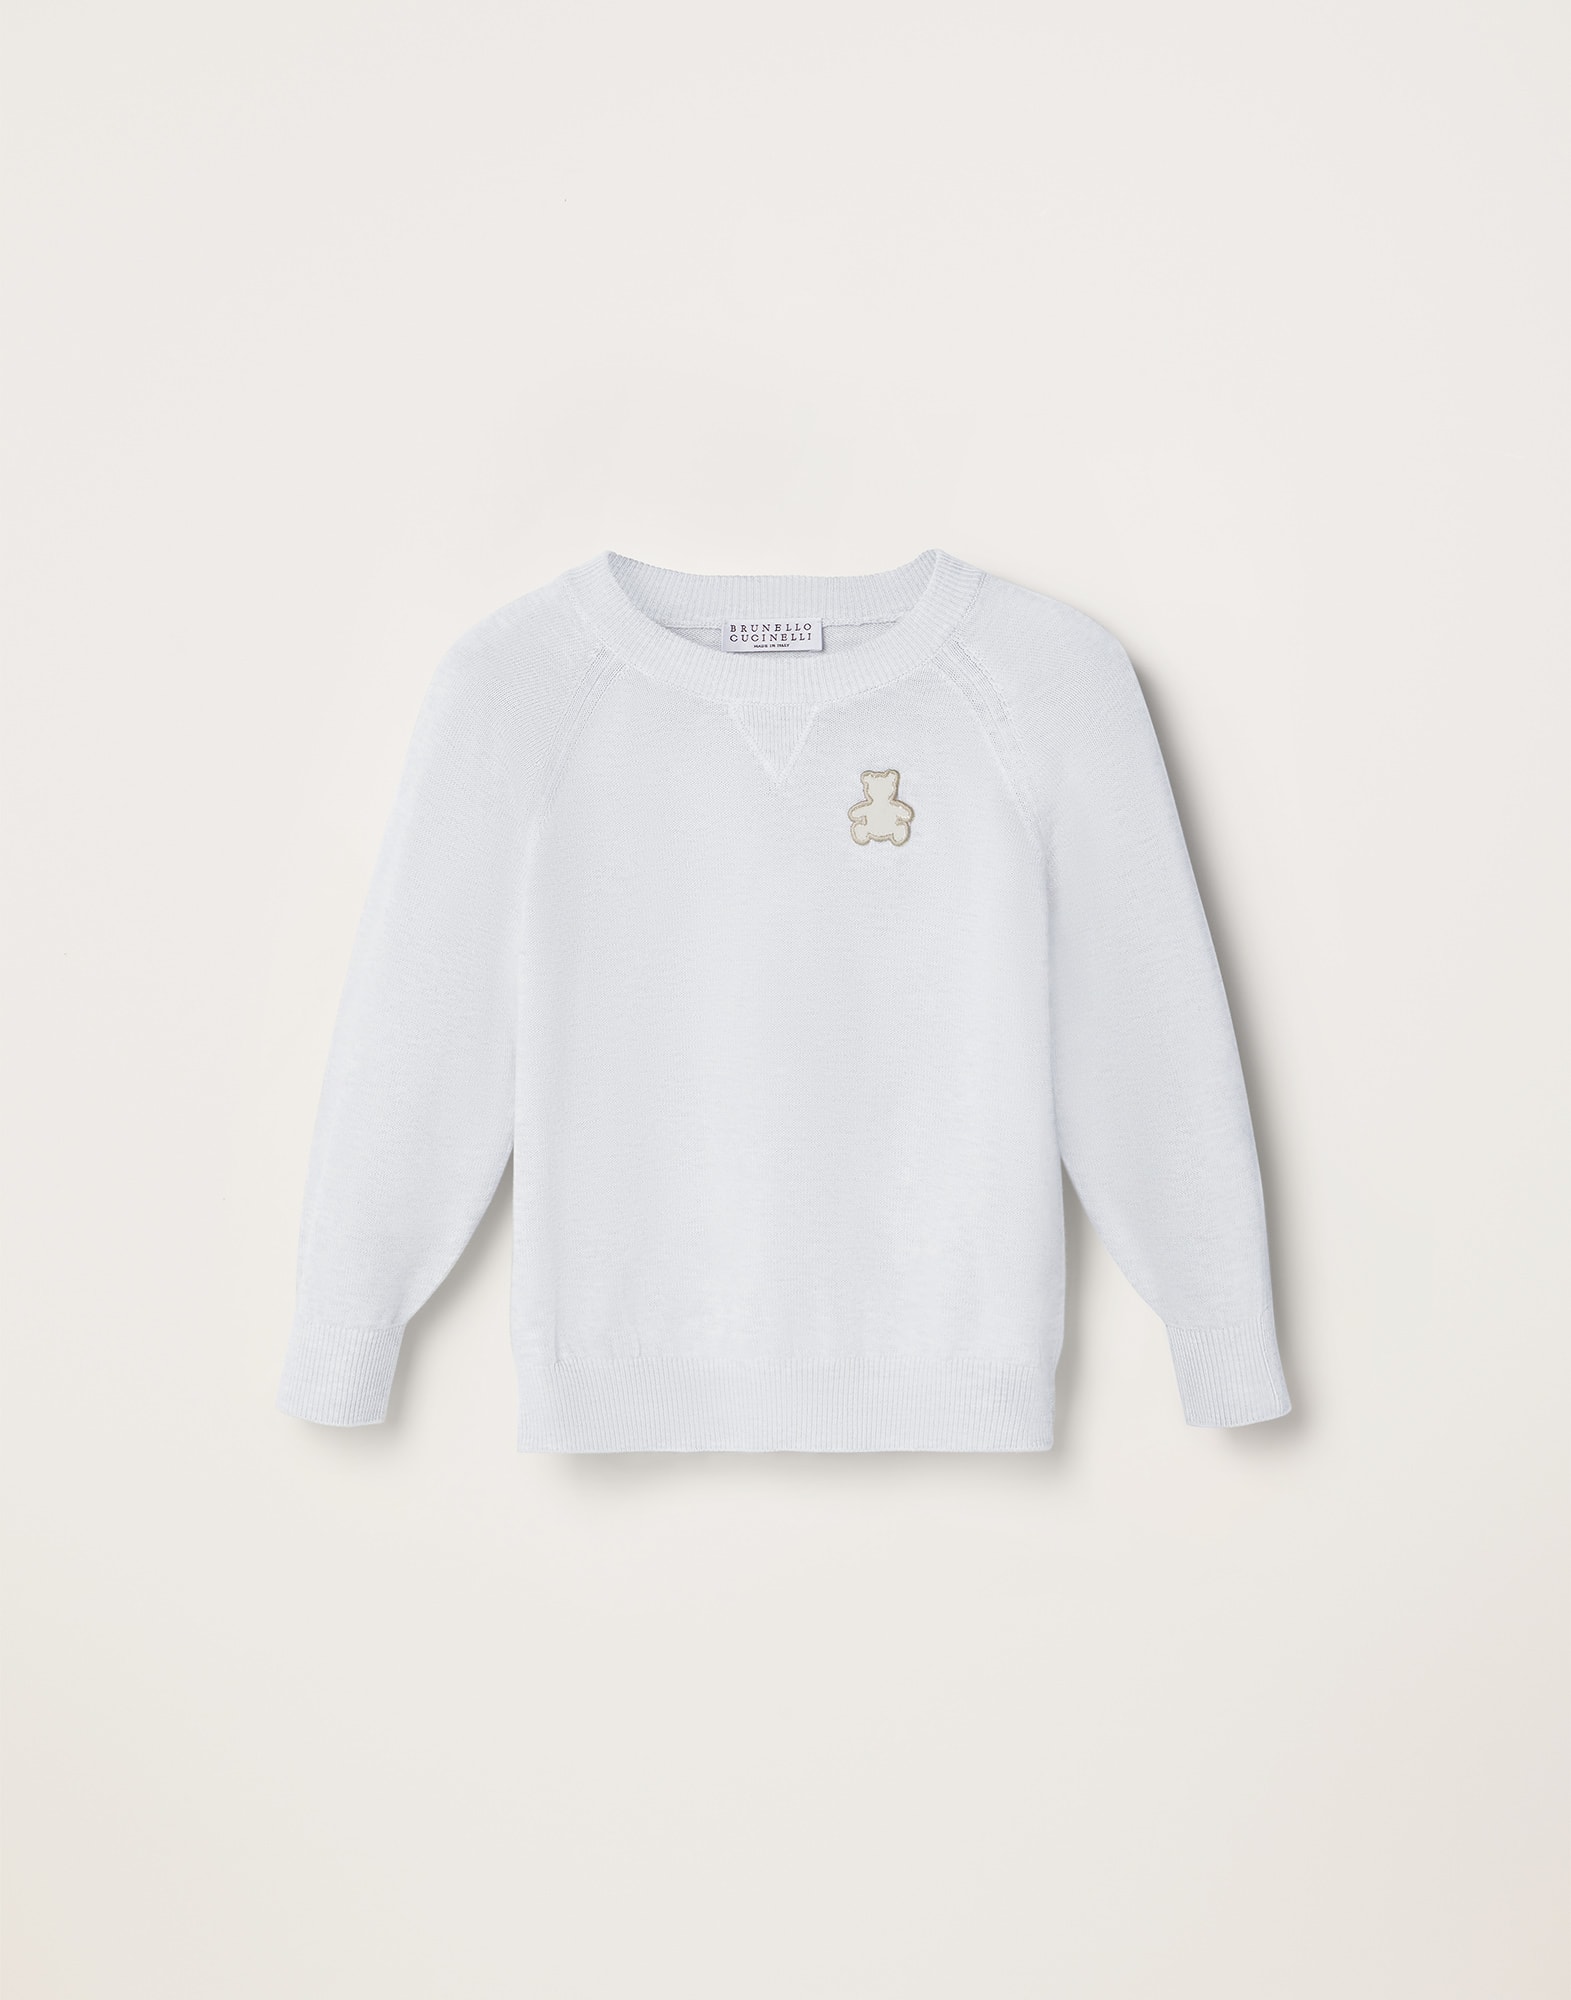 Cotton Bernie sweater